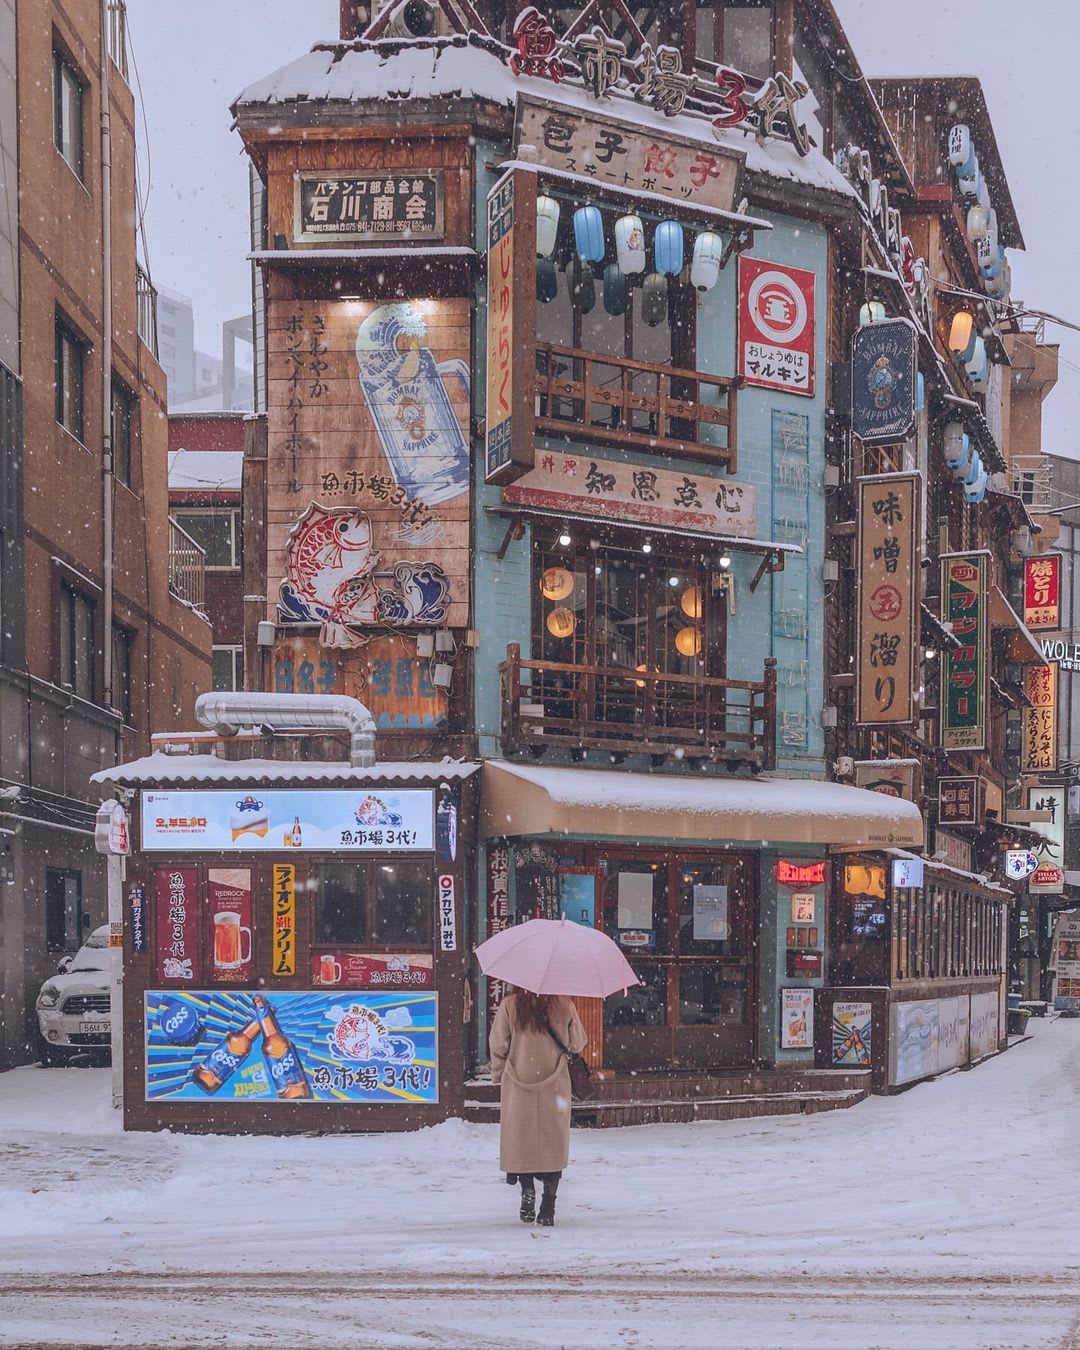 Japanese restaurant in the snow, Mapo District, Seoul, South Korea.